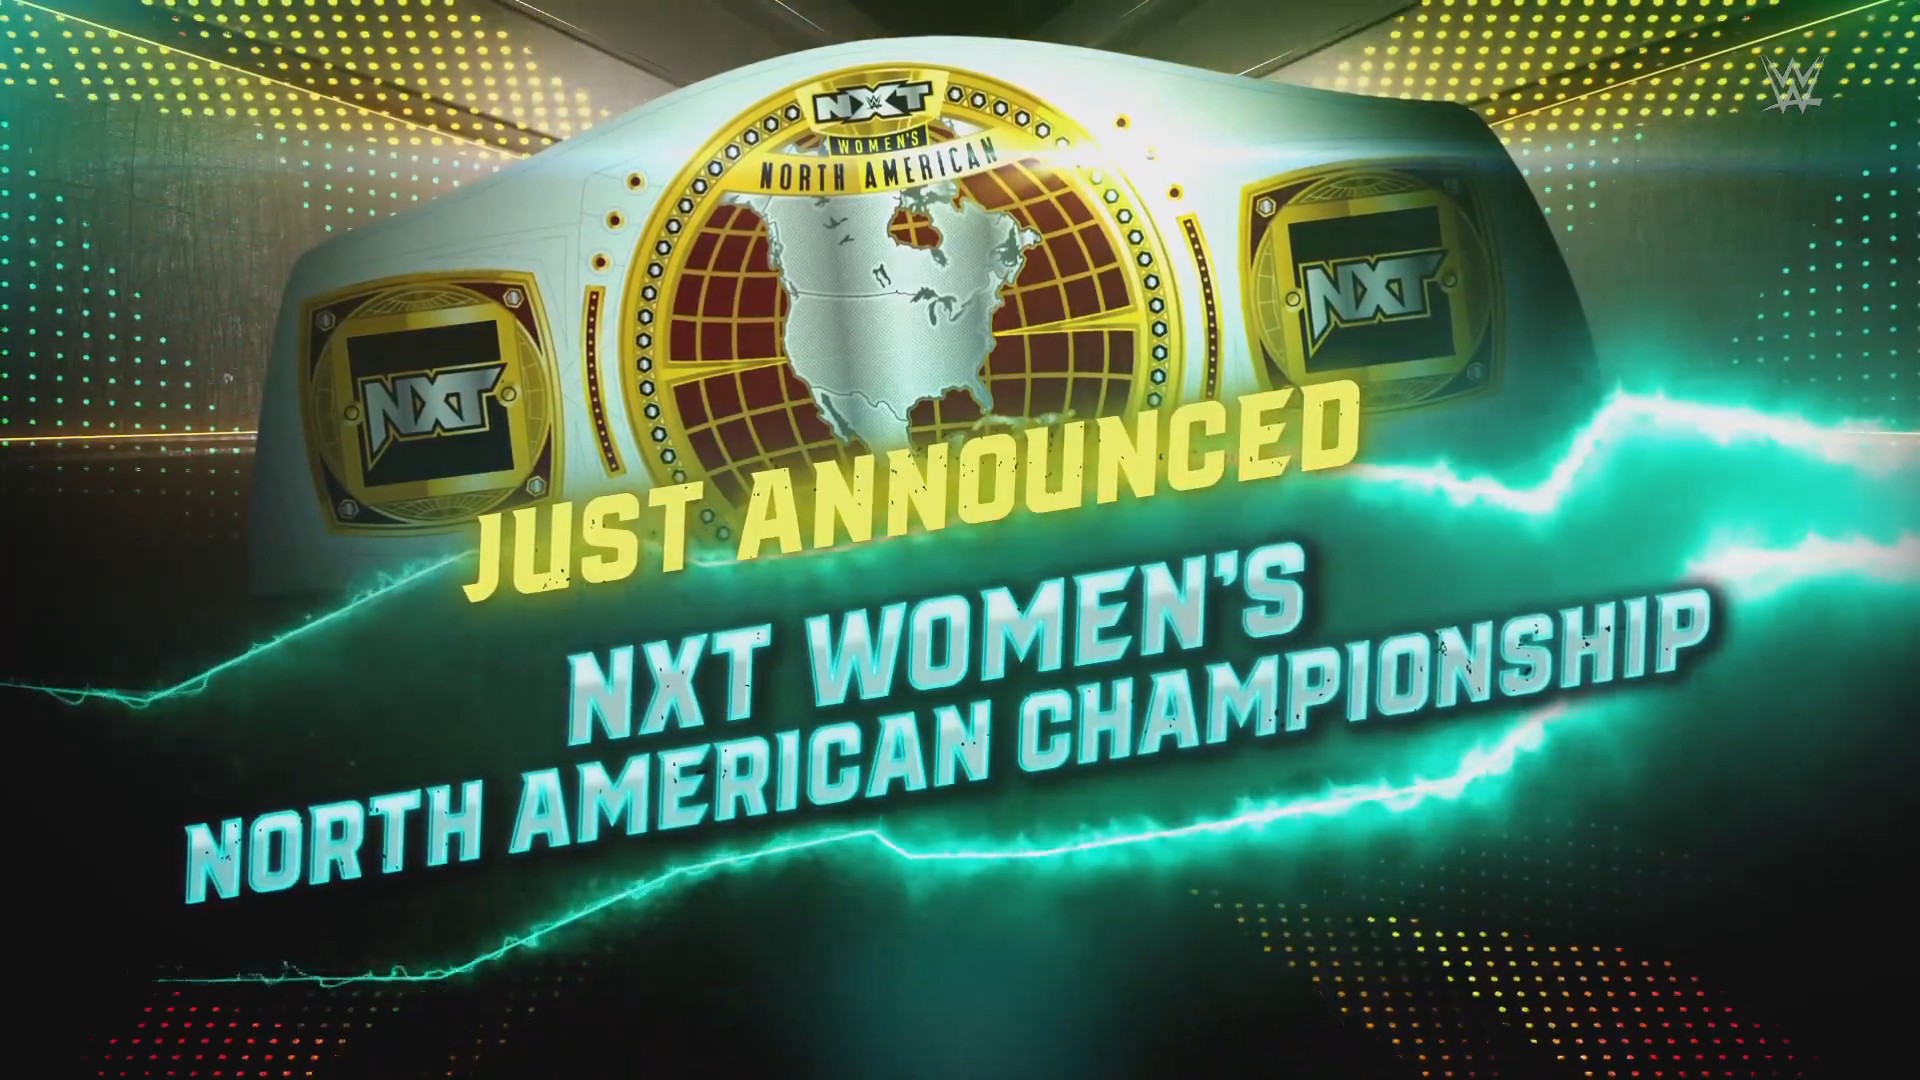 NXT Women's North American Championship